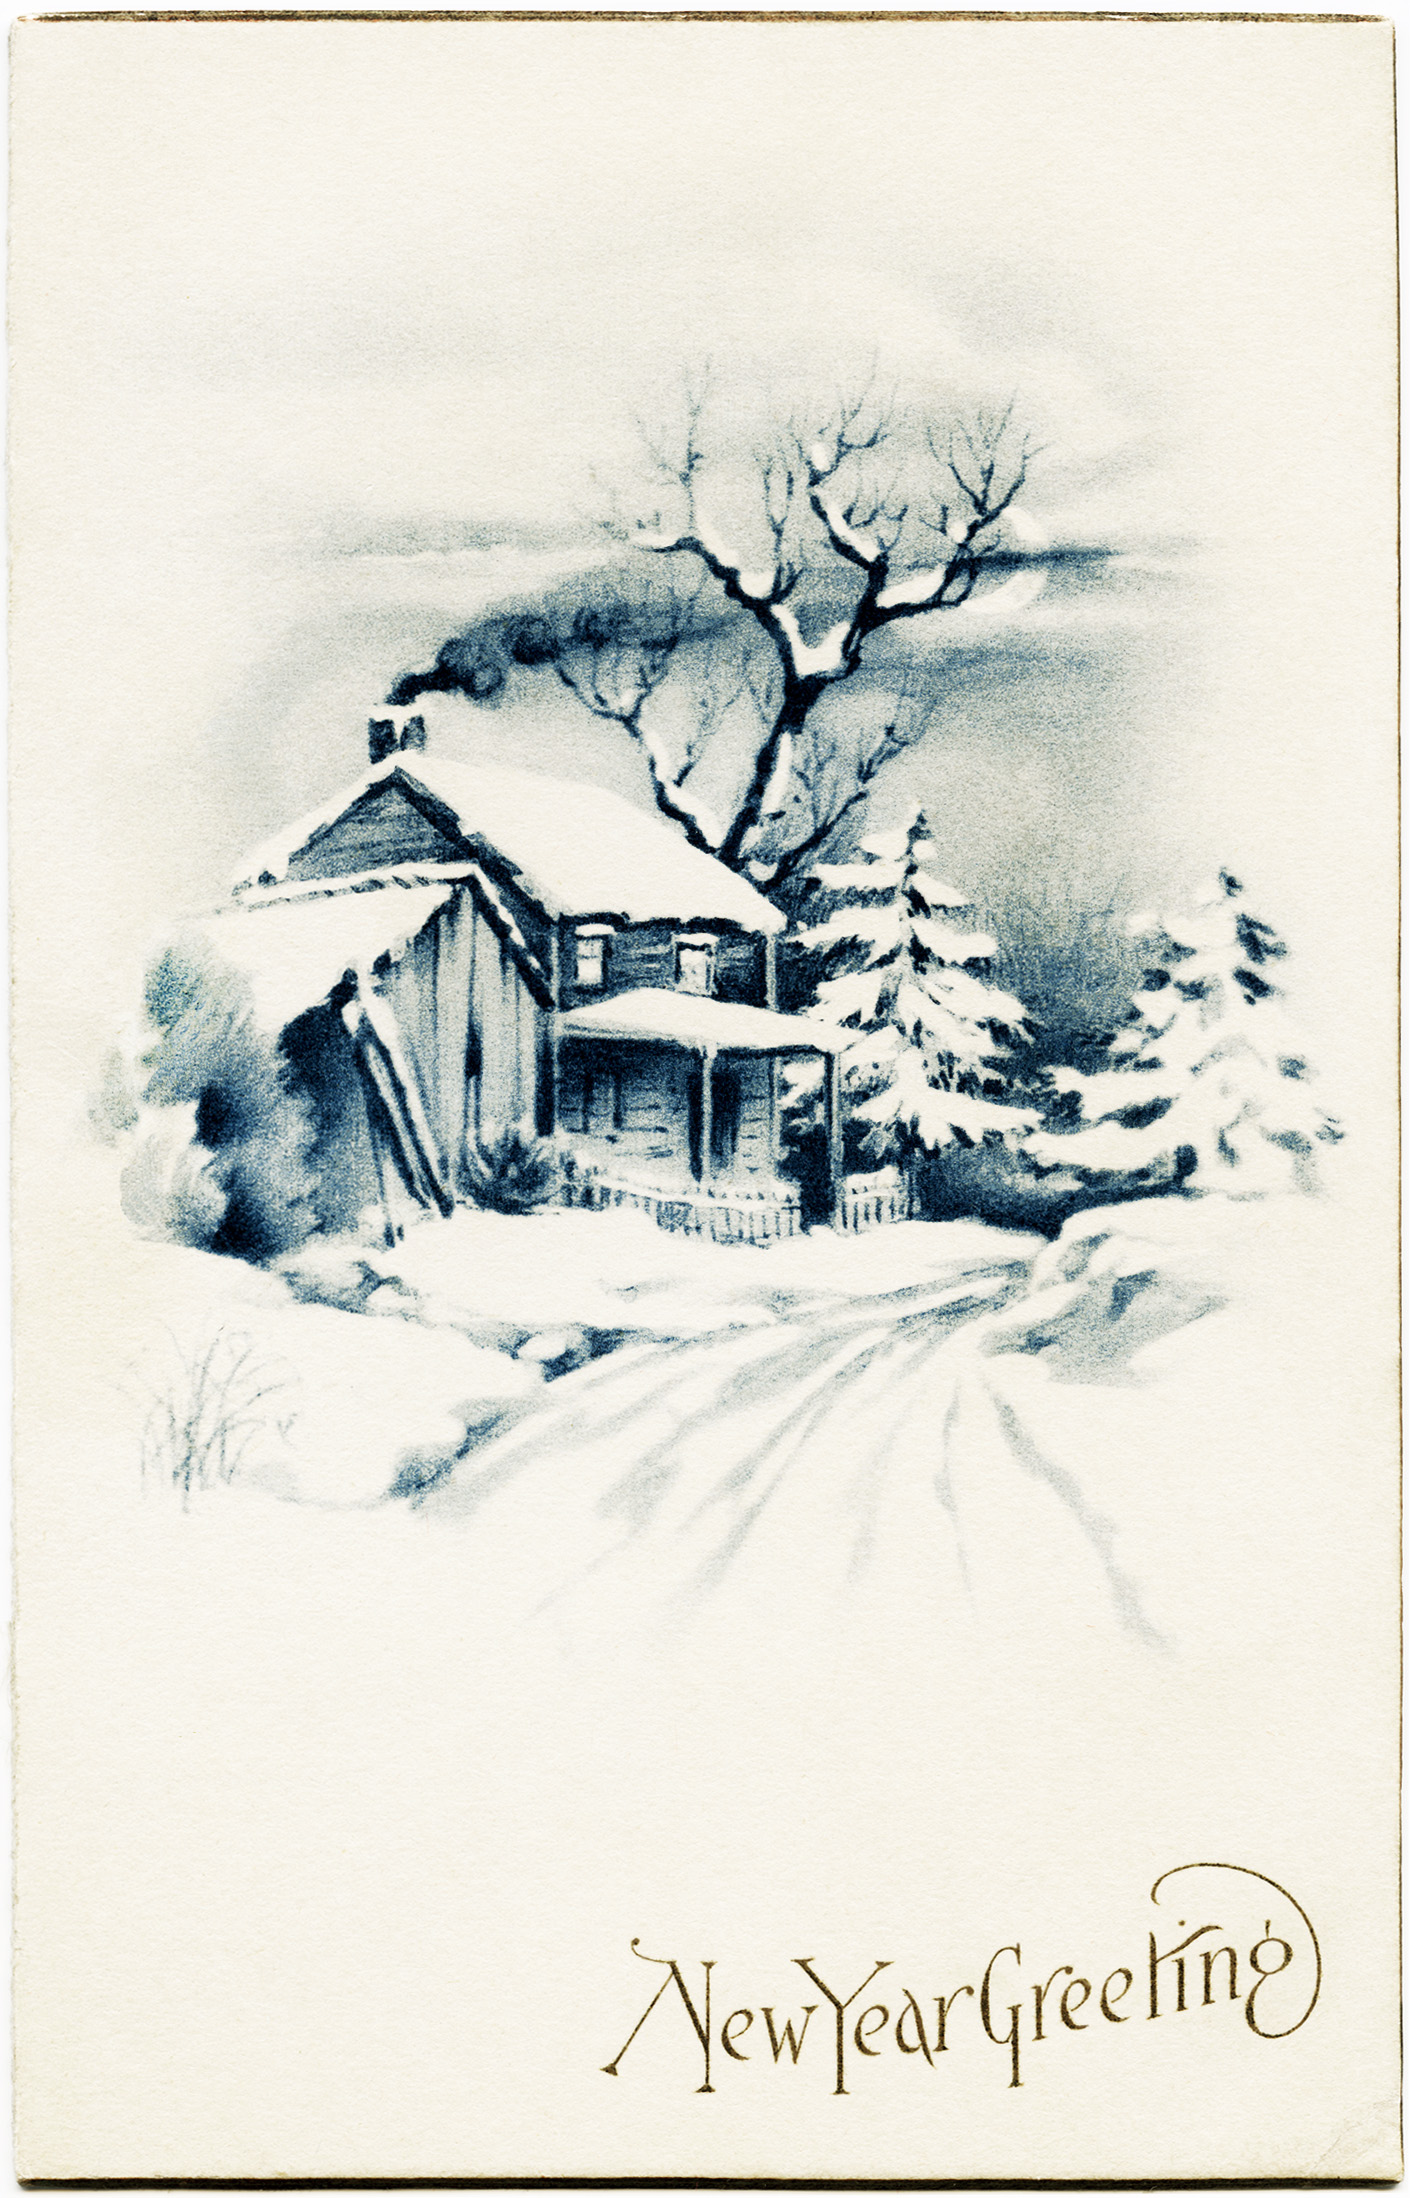 Snowy Winter Country Scene   Free Vintage Image   Old Design Shop Blog